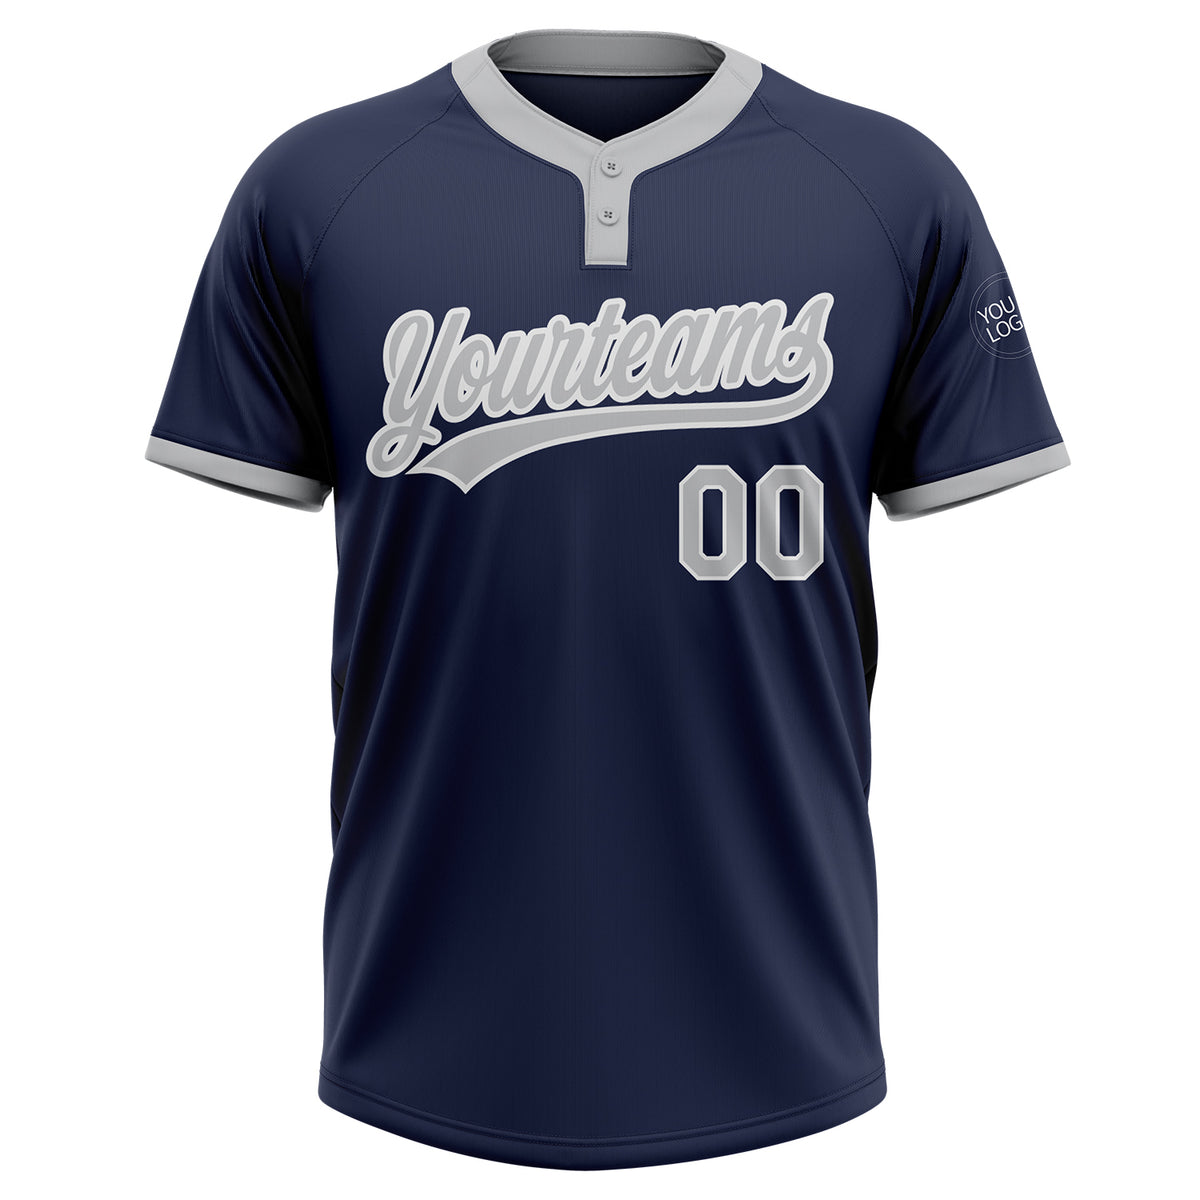 Premium AI Image  Navy blue softball uniform